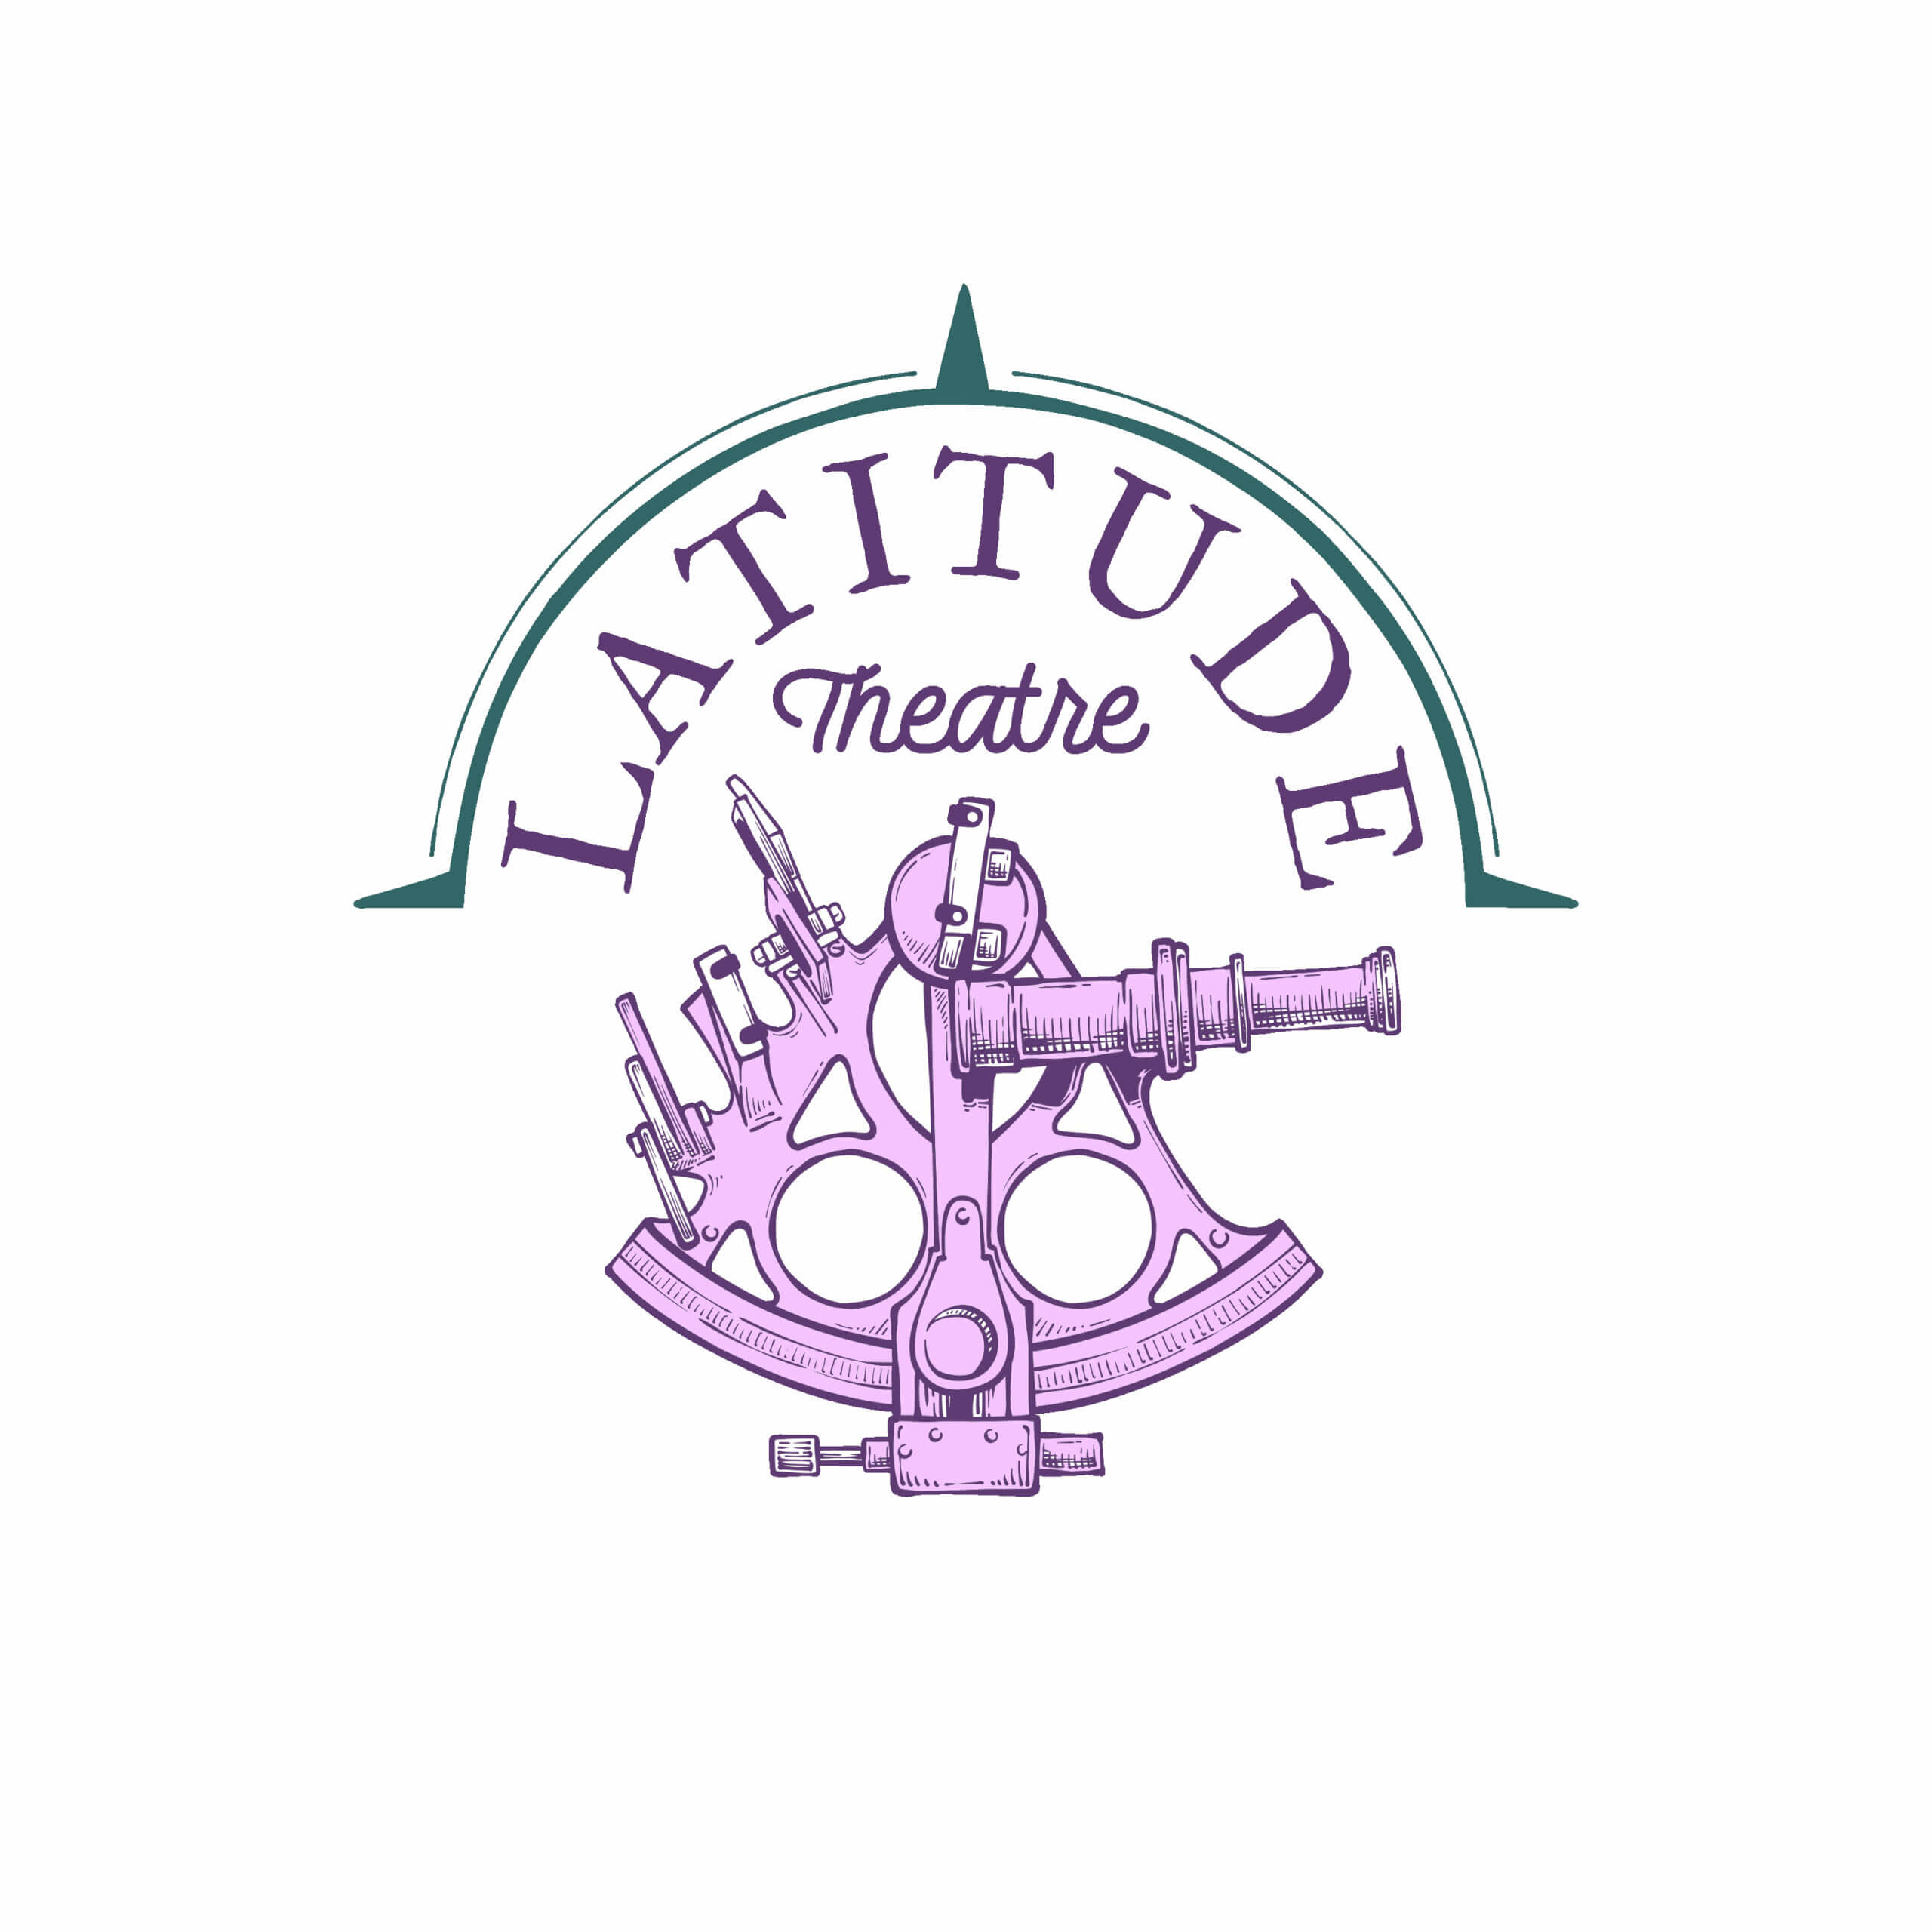 Latitude-Theatre-1-scaled